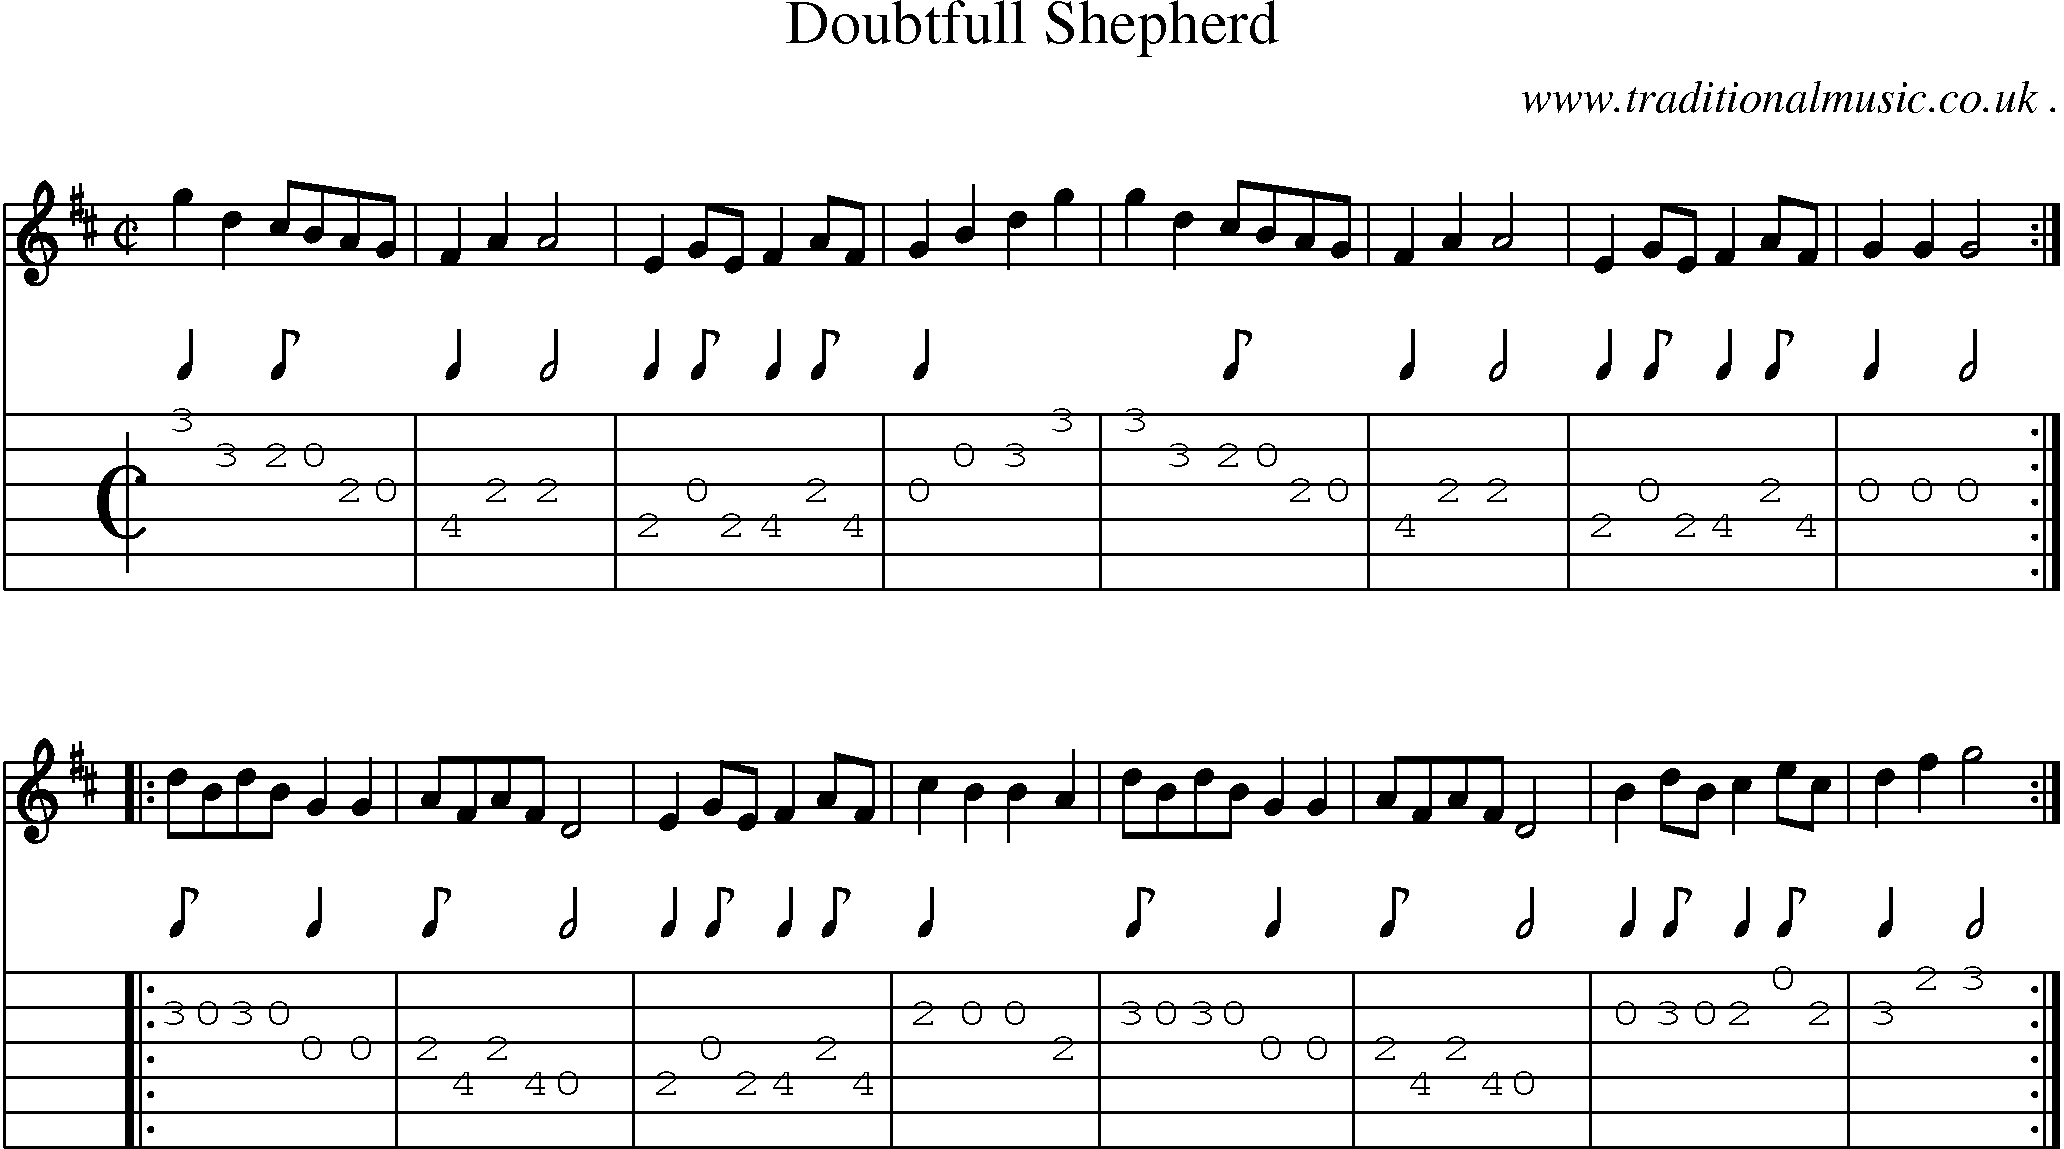 Sheet-Music and Guitar Tabs for Doubtfull Shepherd